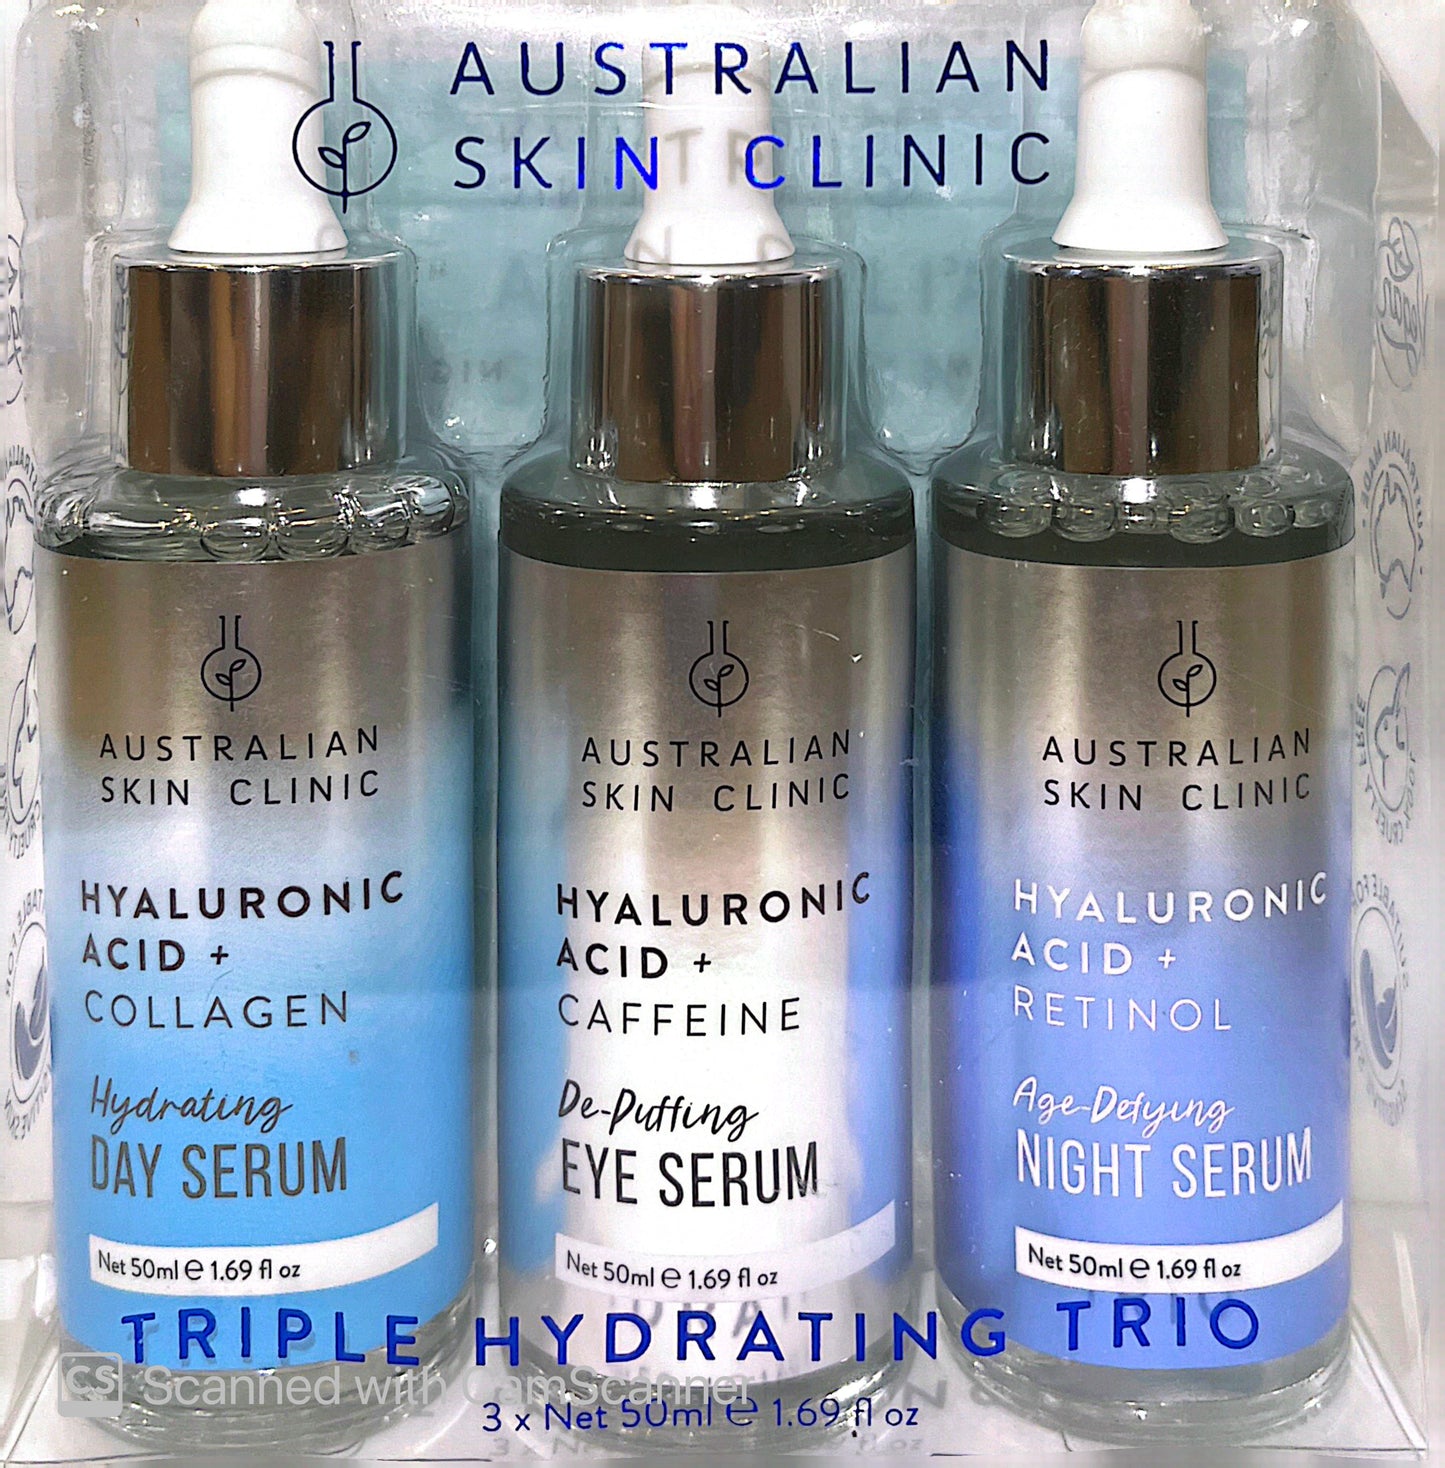 AUSTRALIAN SKIN CLINIC |Hydrating DAY SERUM: Hyaluronic Acid +Collagen & De-puffing EYE SERUM: Hyaluronic Acid + Caffeine & NIGHT SERUM: Hyaluronic Acid + Retinol ) | Net 3X50ml e 1.69 fl oz